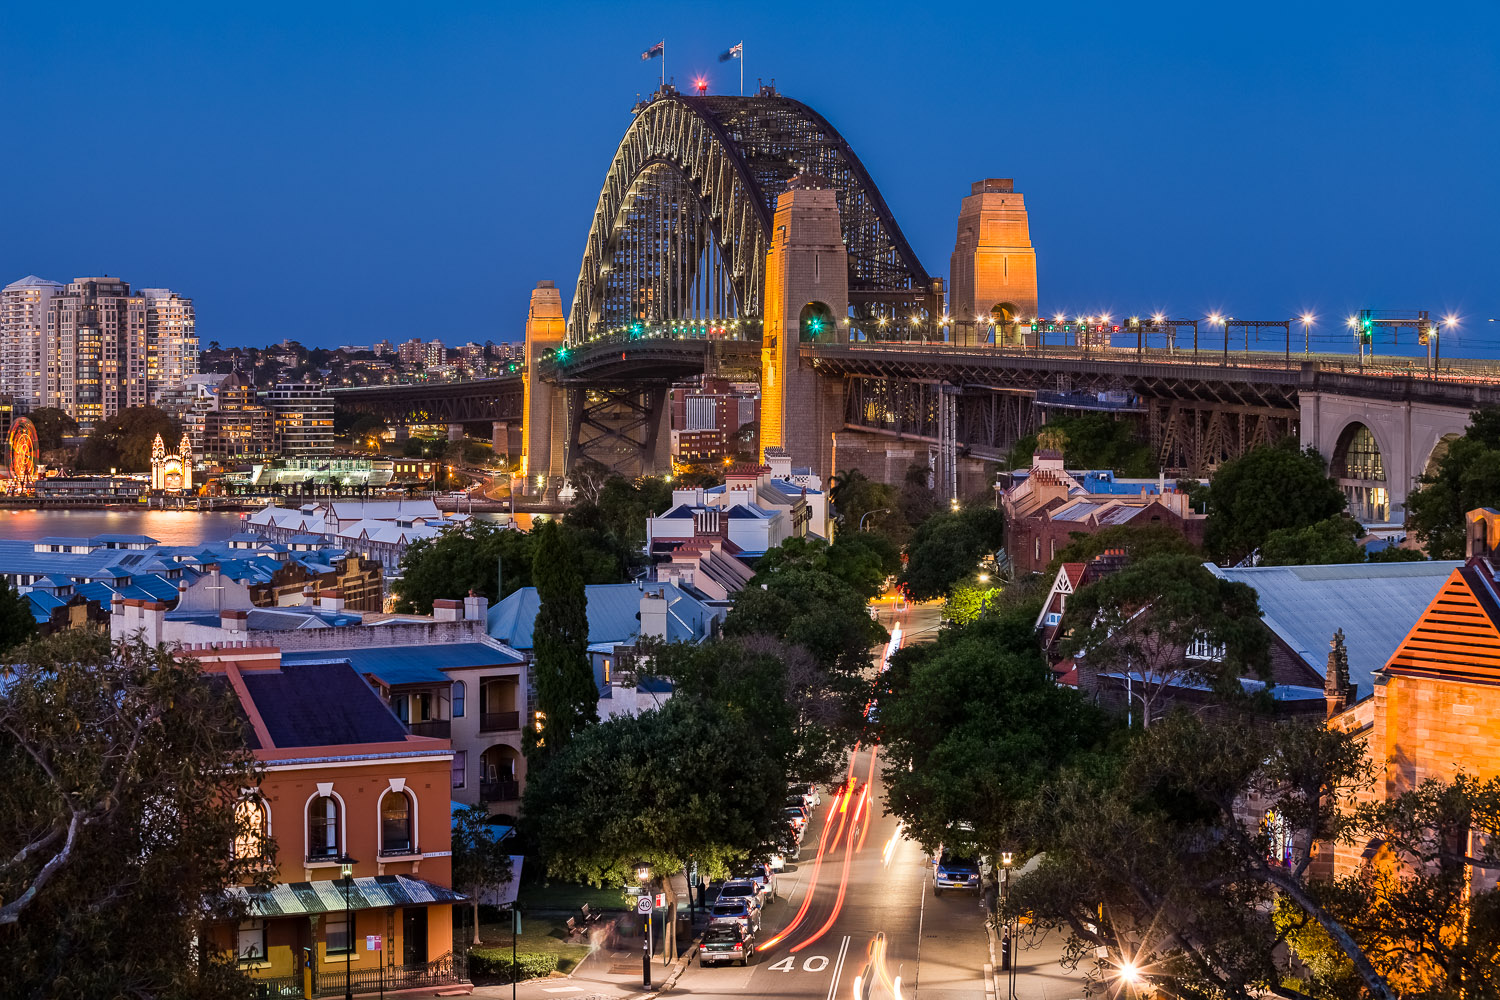 002_Sydney Harbor Bridge- Observatory Hill.jpg